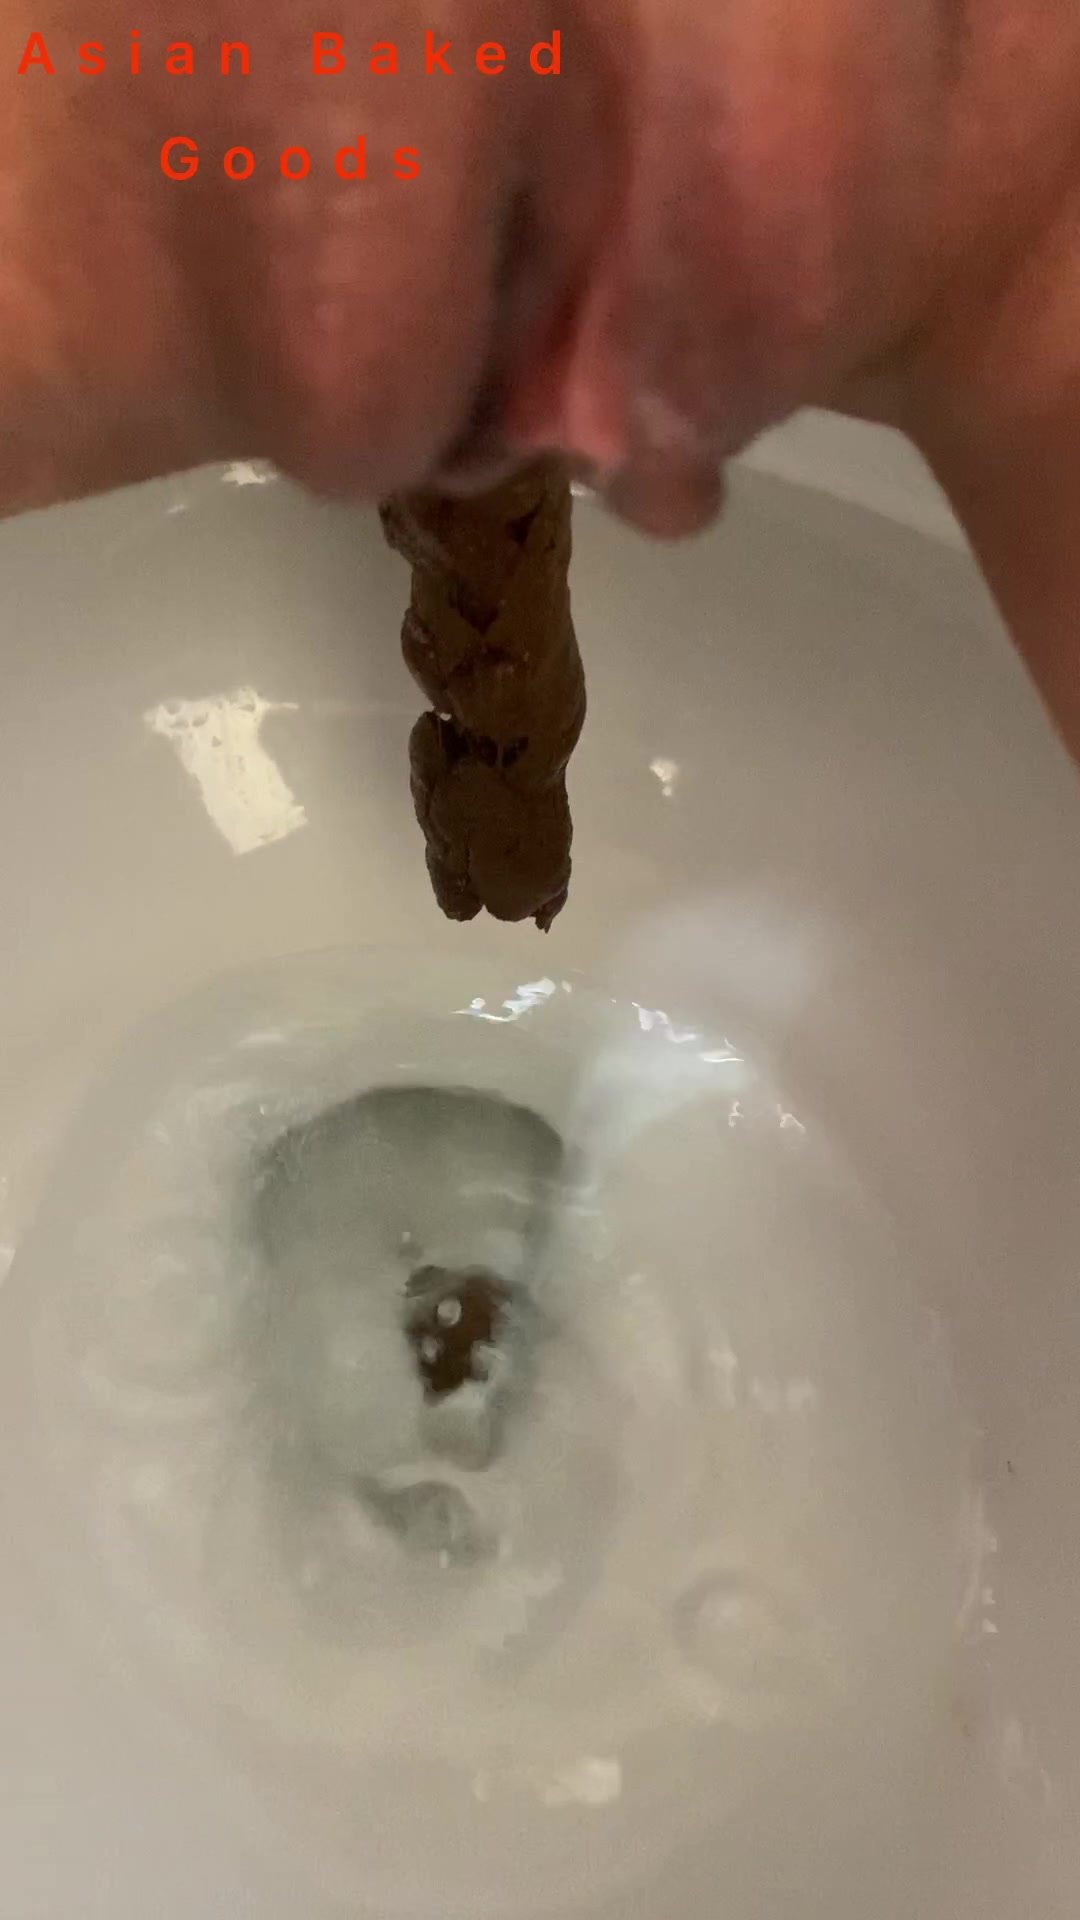 Hot girl pooping - video 33